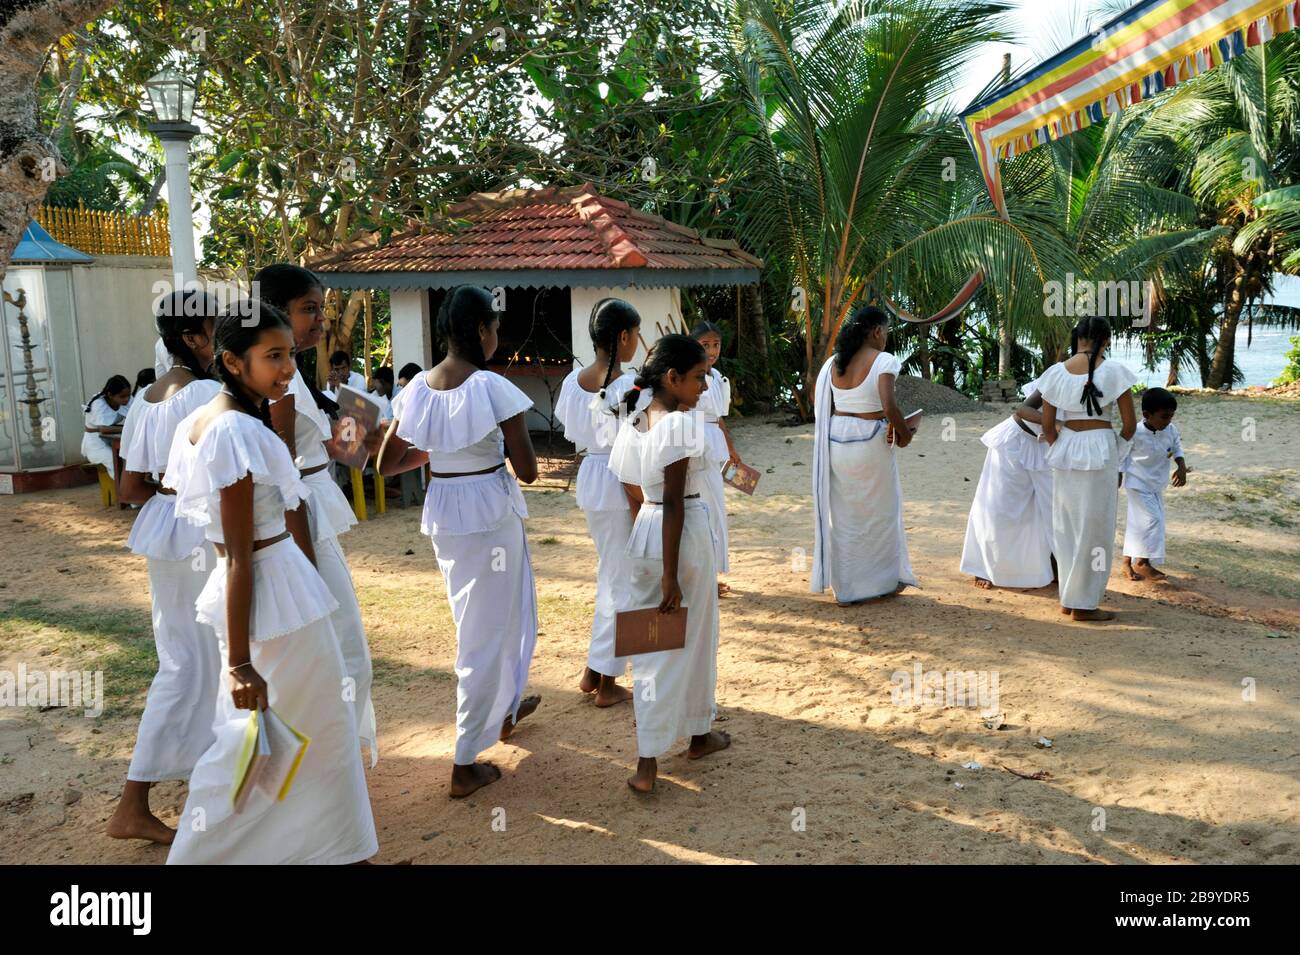 Sri Lanka, Mirissa, temple bouddhiste Dhammikagiri Viharaya, école bouddhiste du dimanche Banque D'Images